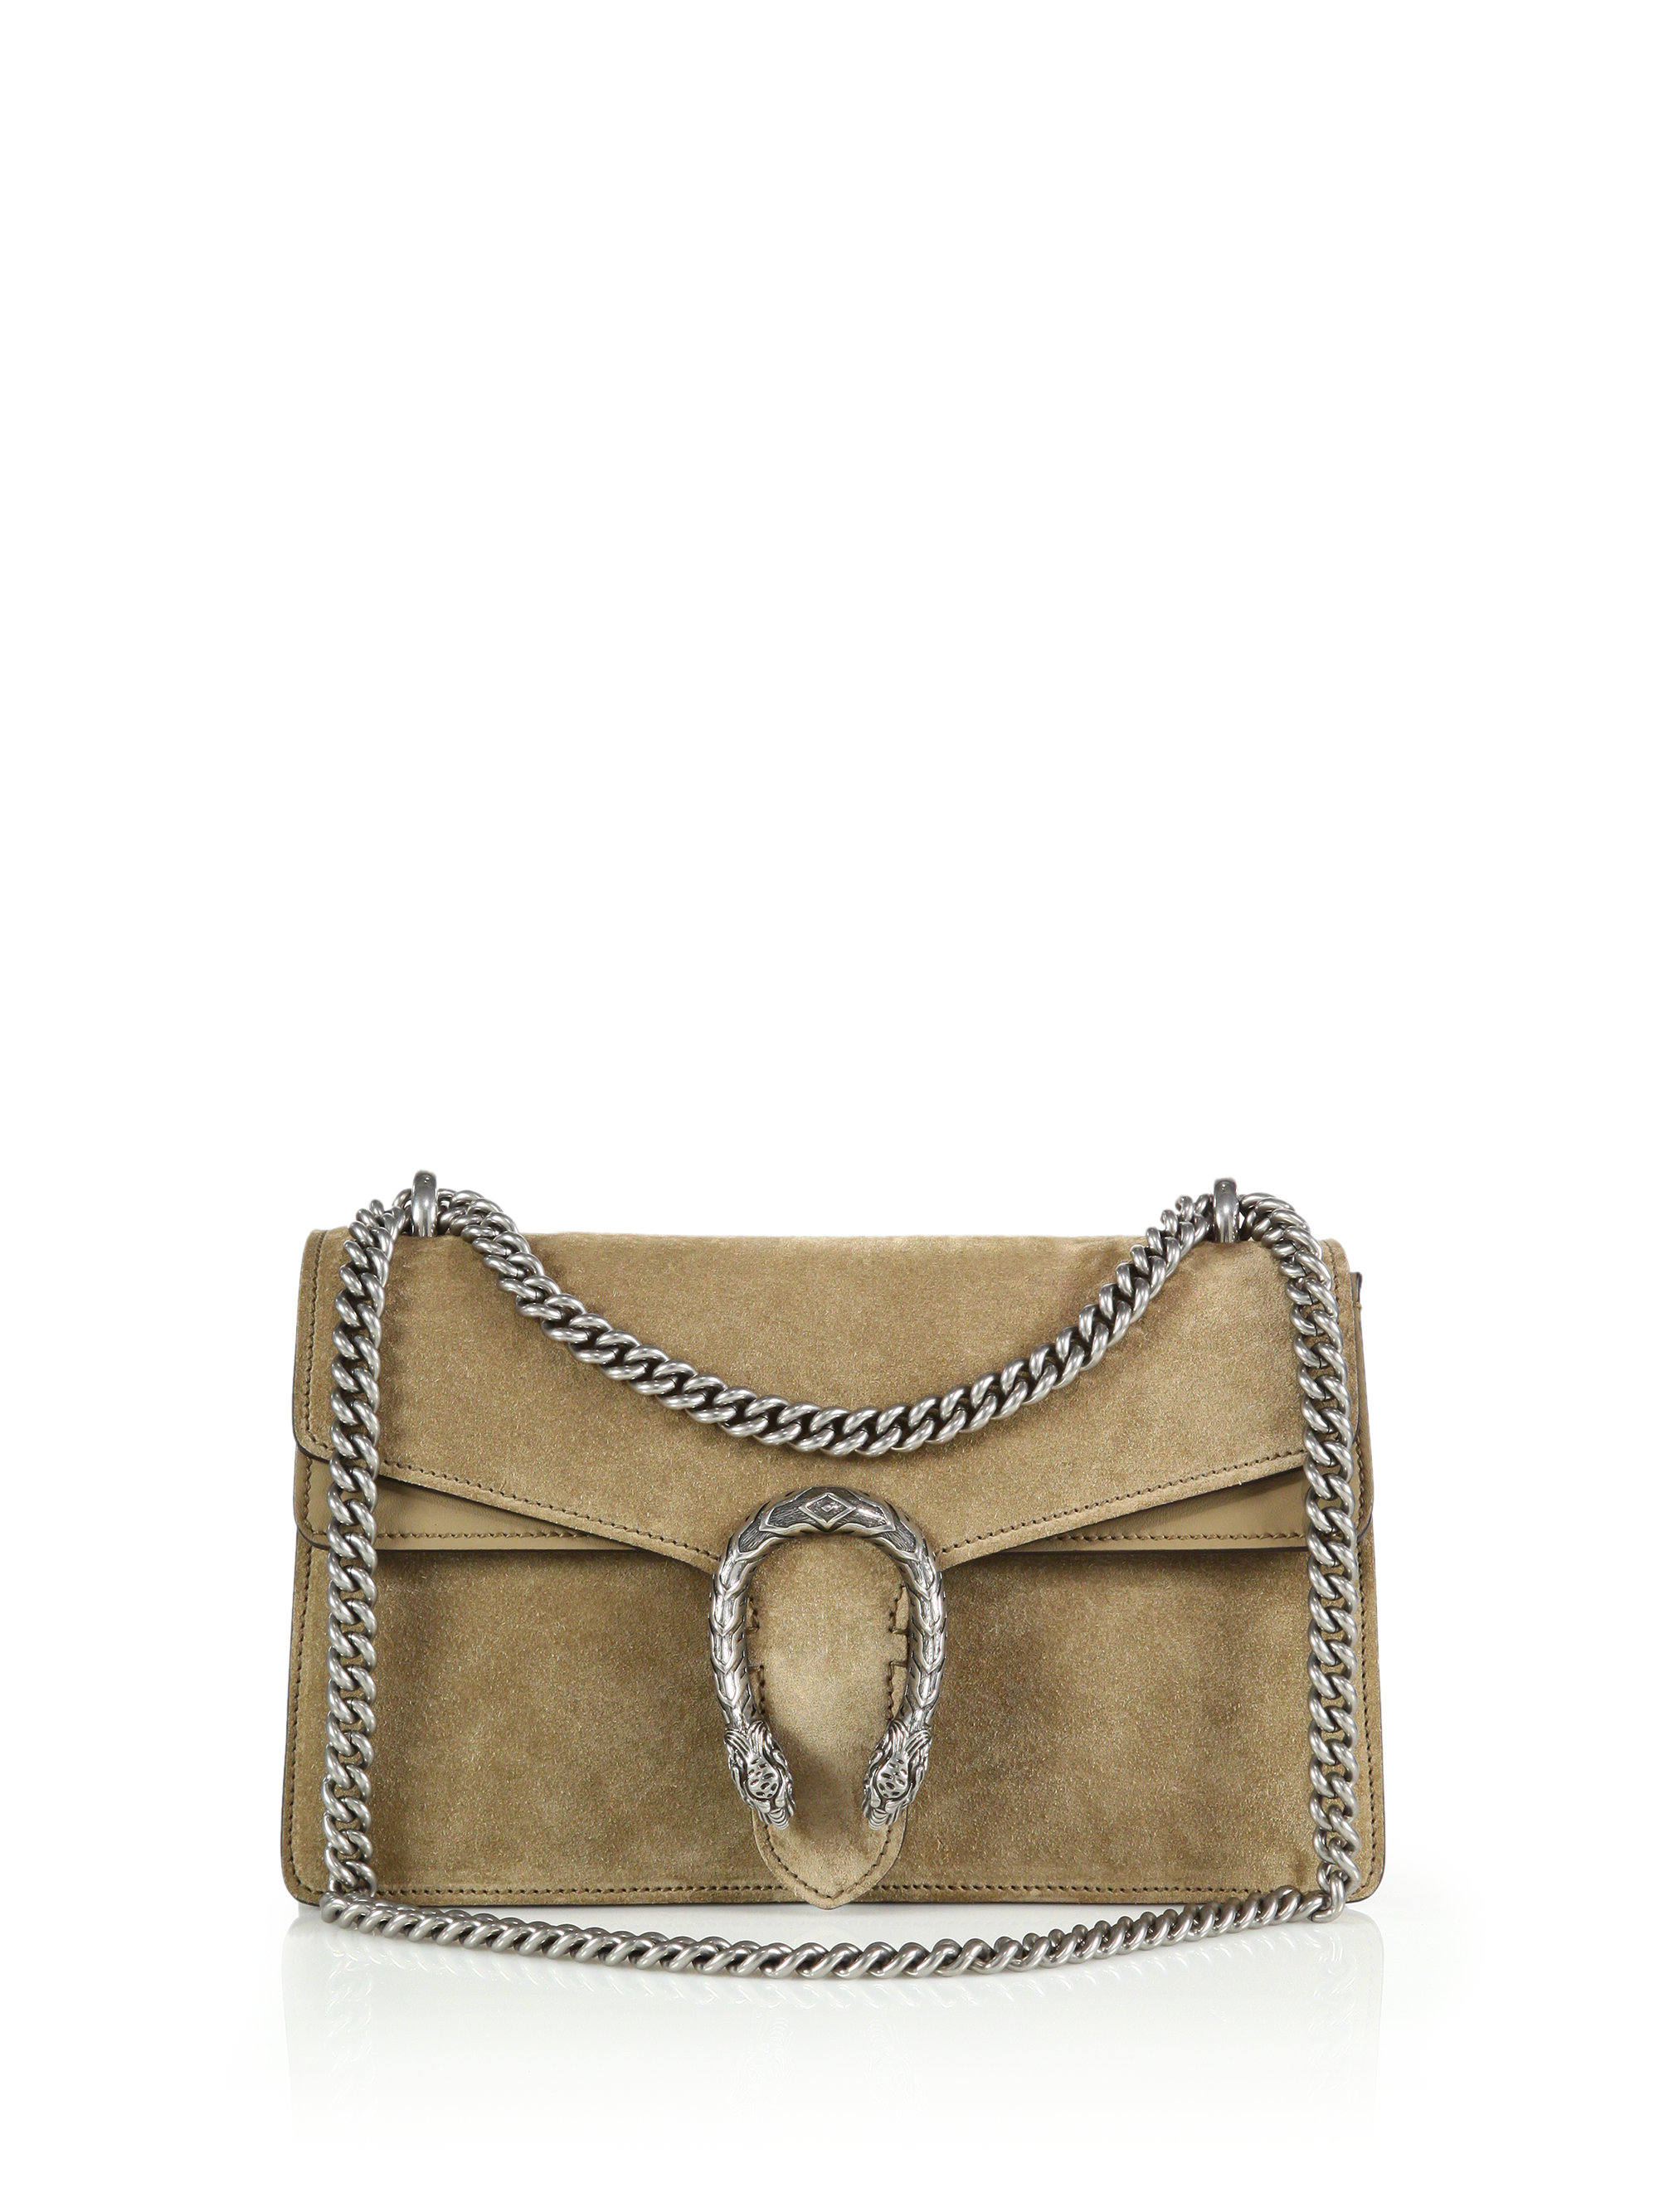 Gucci Dionysus Suede Shoulder Bag in Brown (taupe) | Lyst